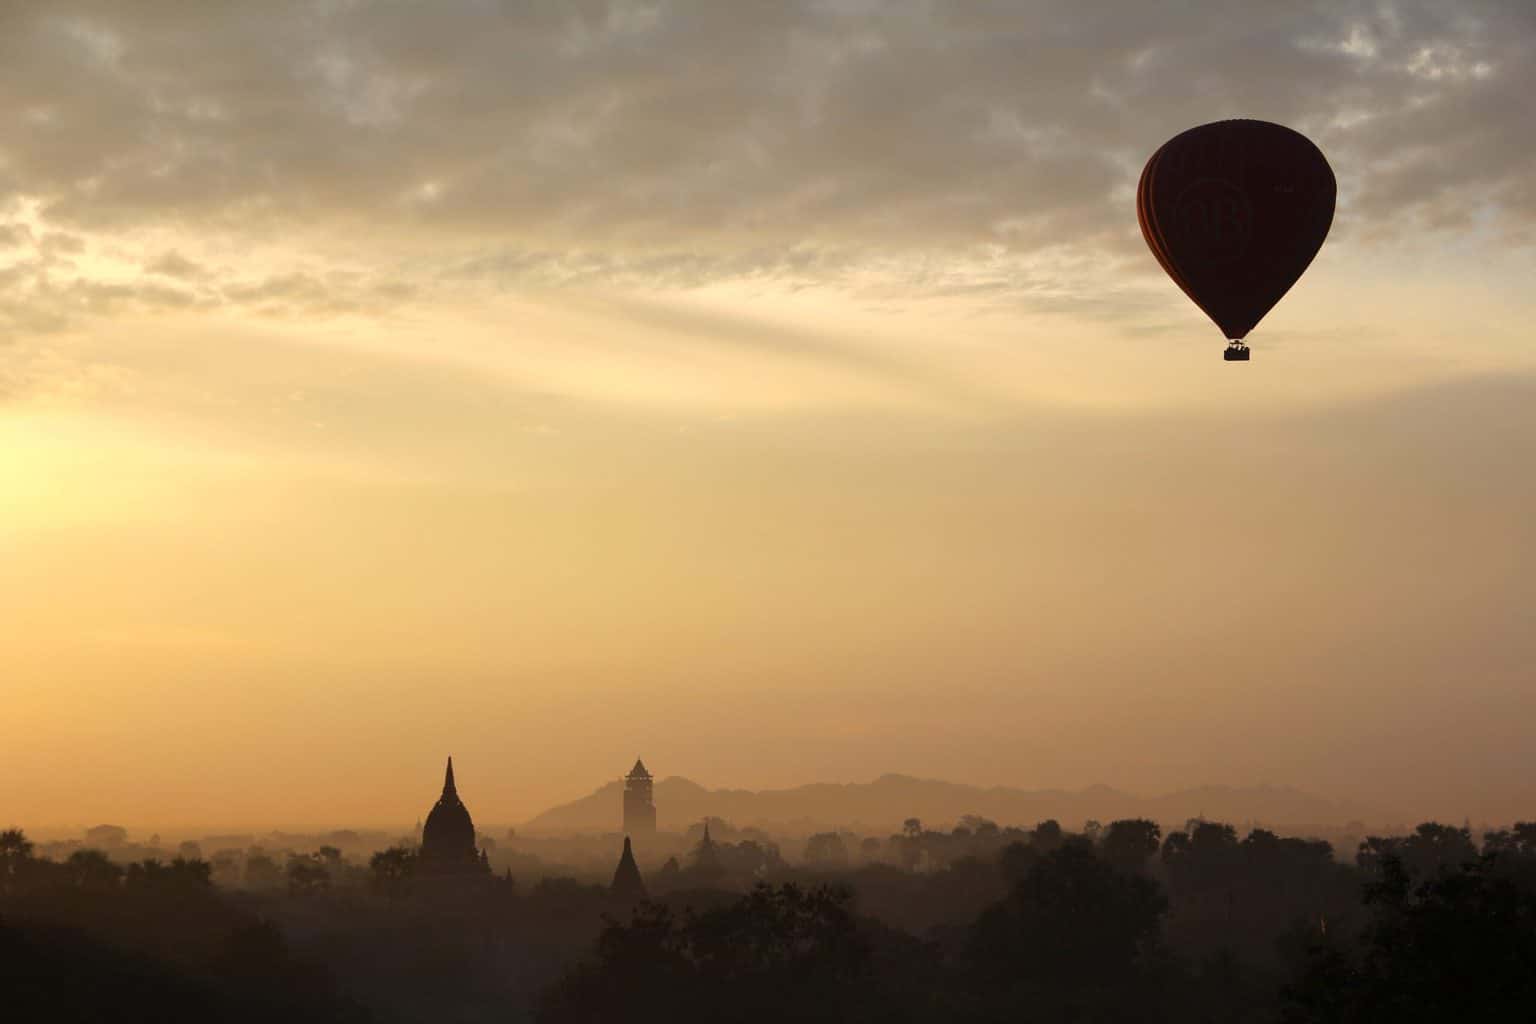 bagan, temple, hot air balloon